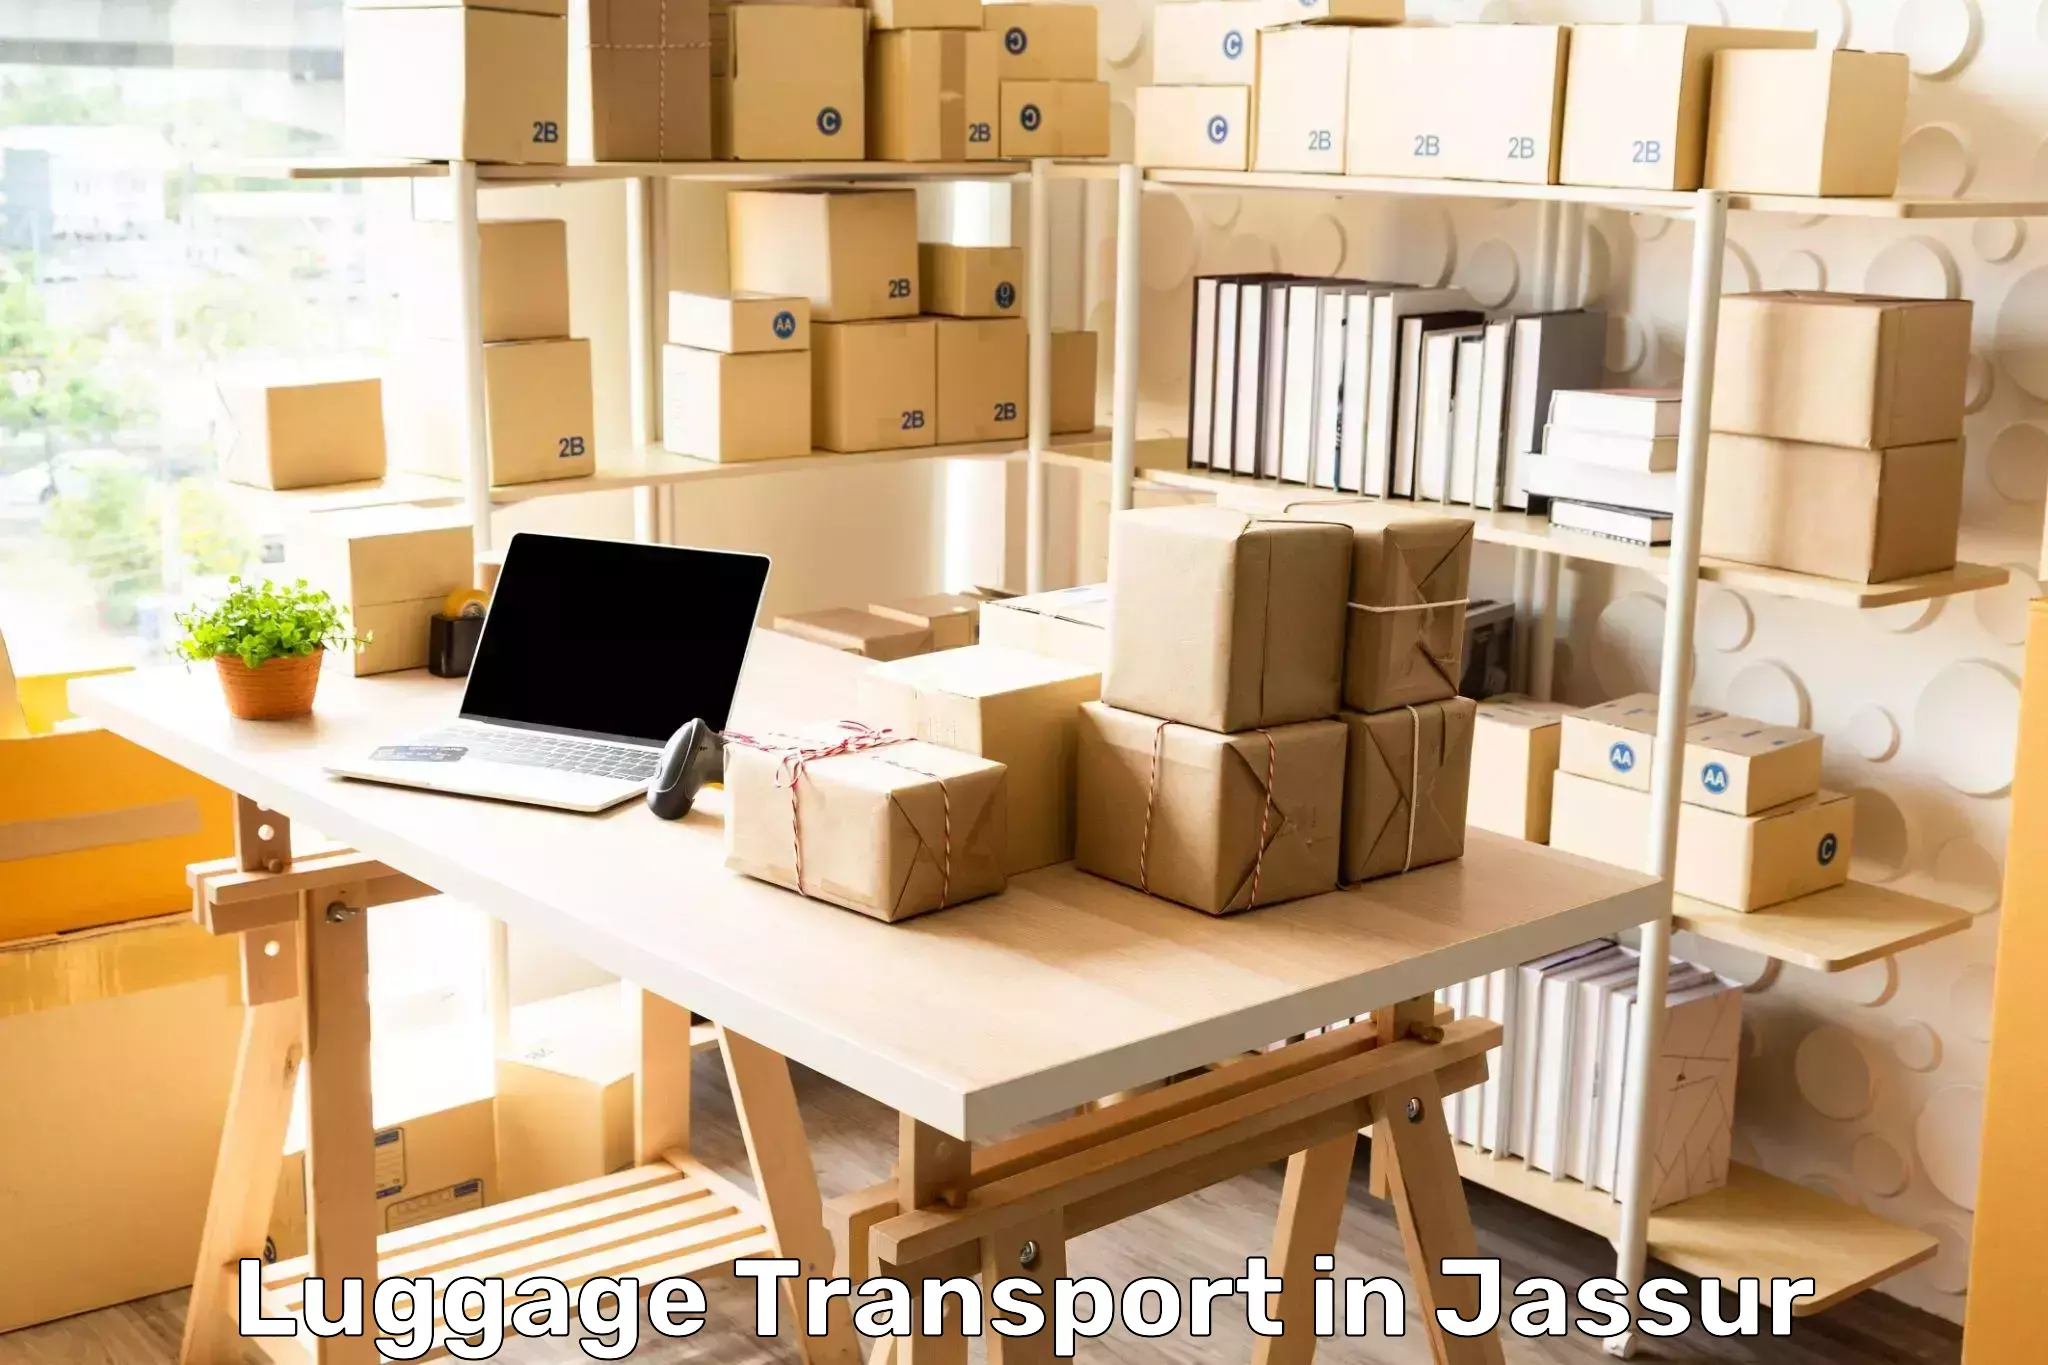 Luggage transport service in Jassur